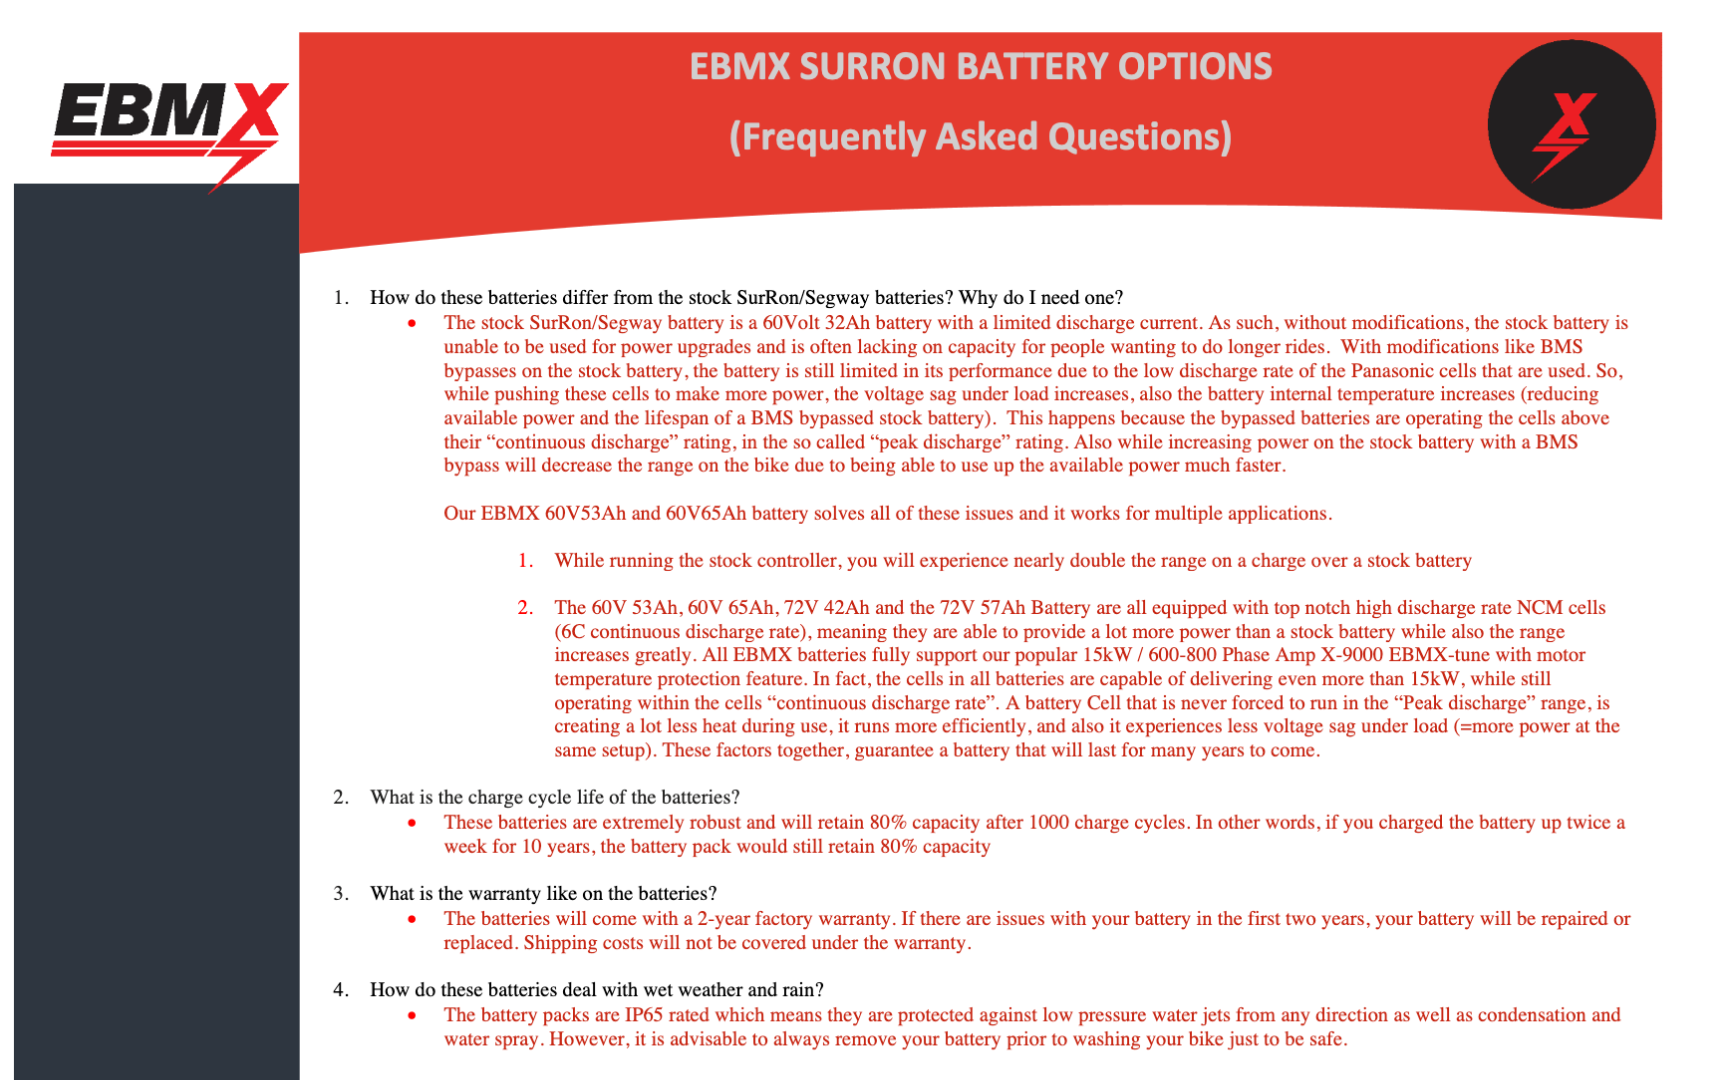 EBMX 60v 53ah Battery Upgrade for Surron/Segway